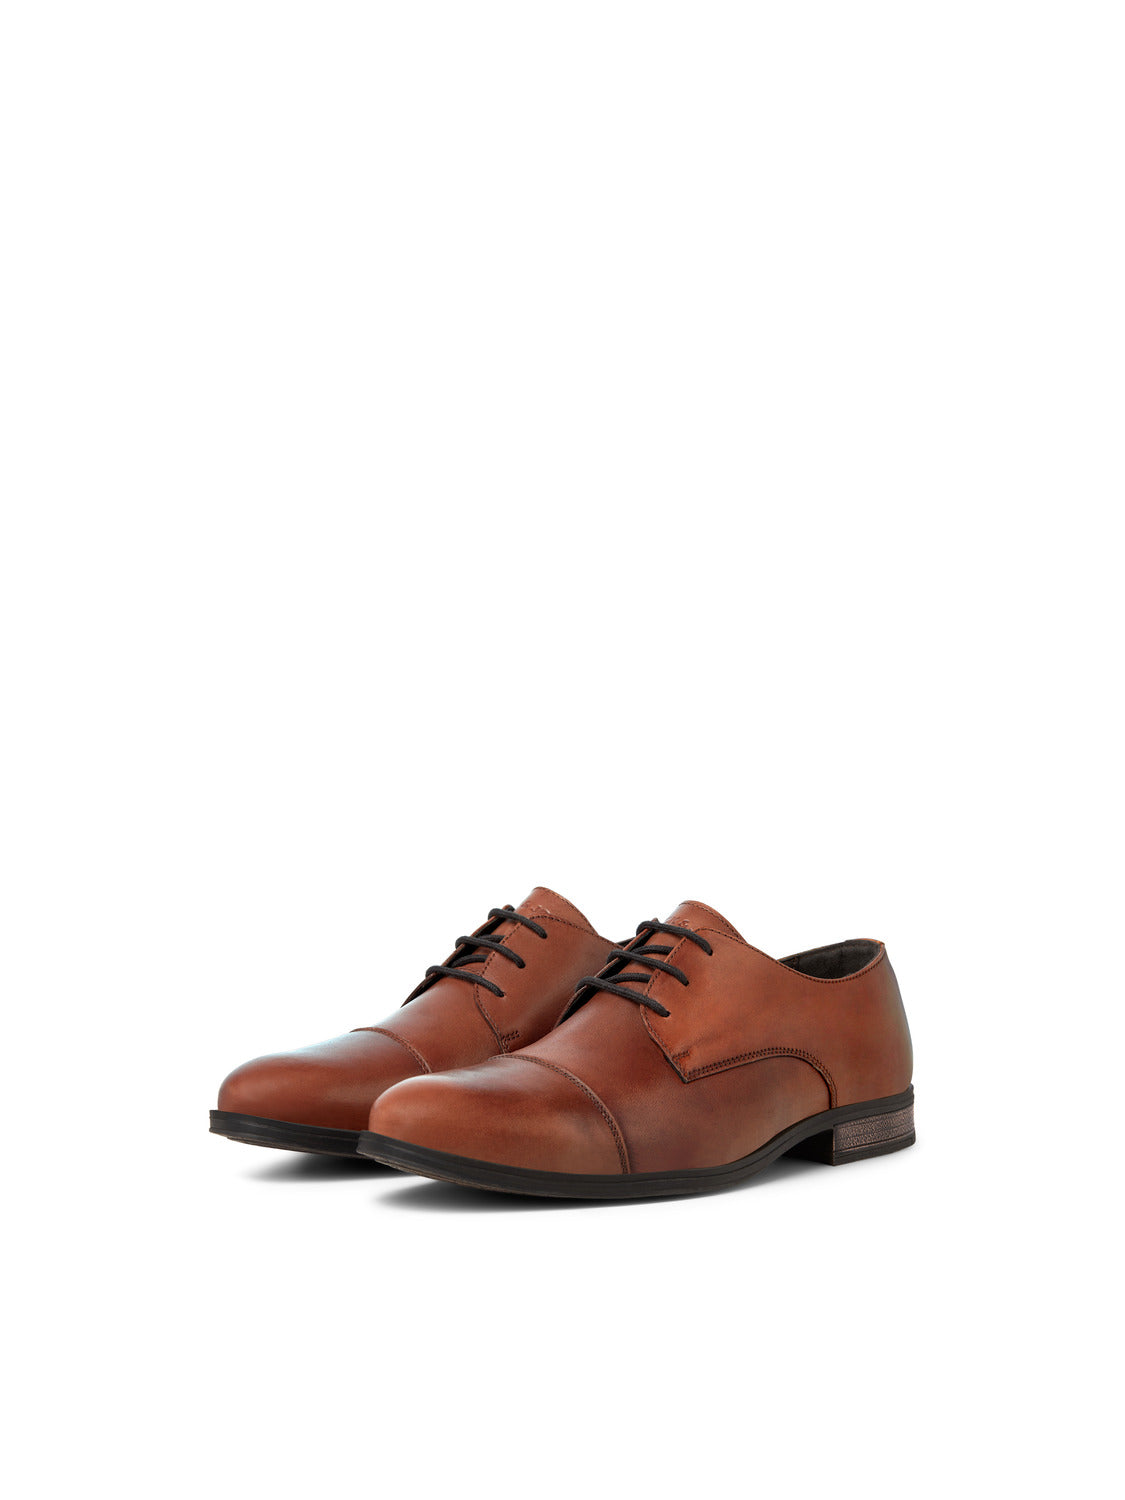 JFWRAYMOND Shoes - Cognac